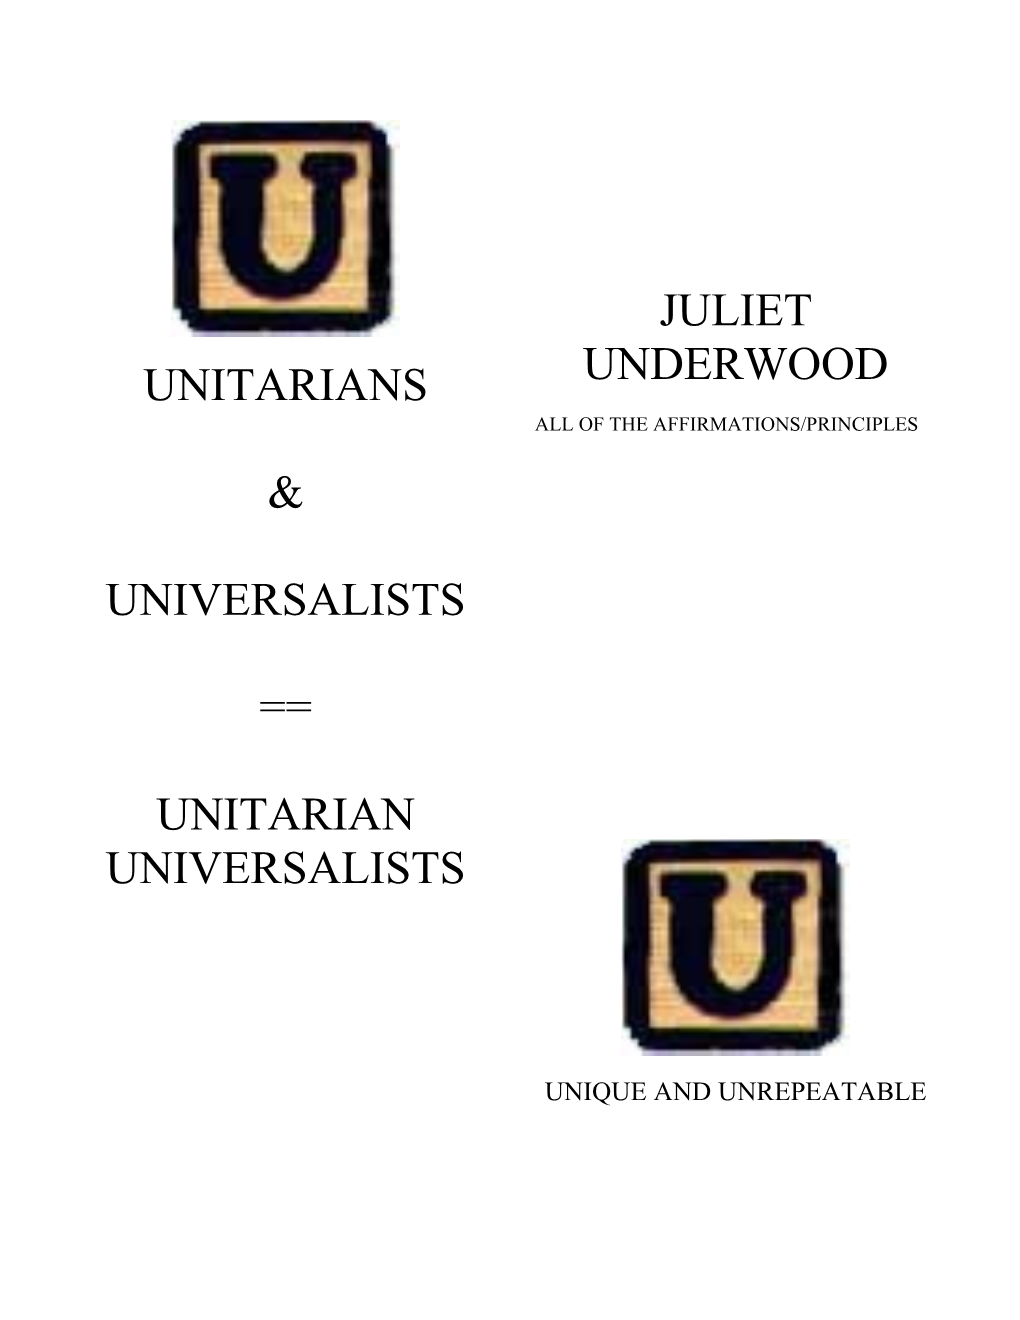 U U Letter U Introduces Unitarians and Universalists Coming Tog